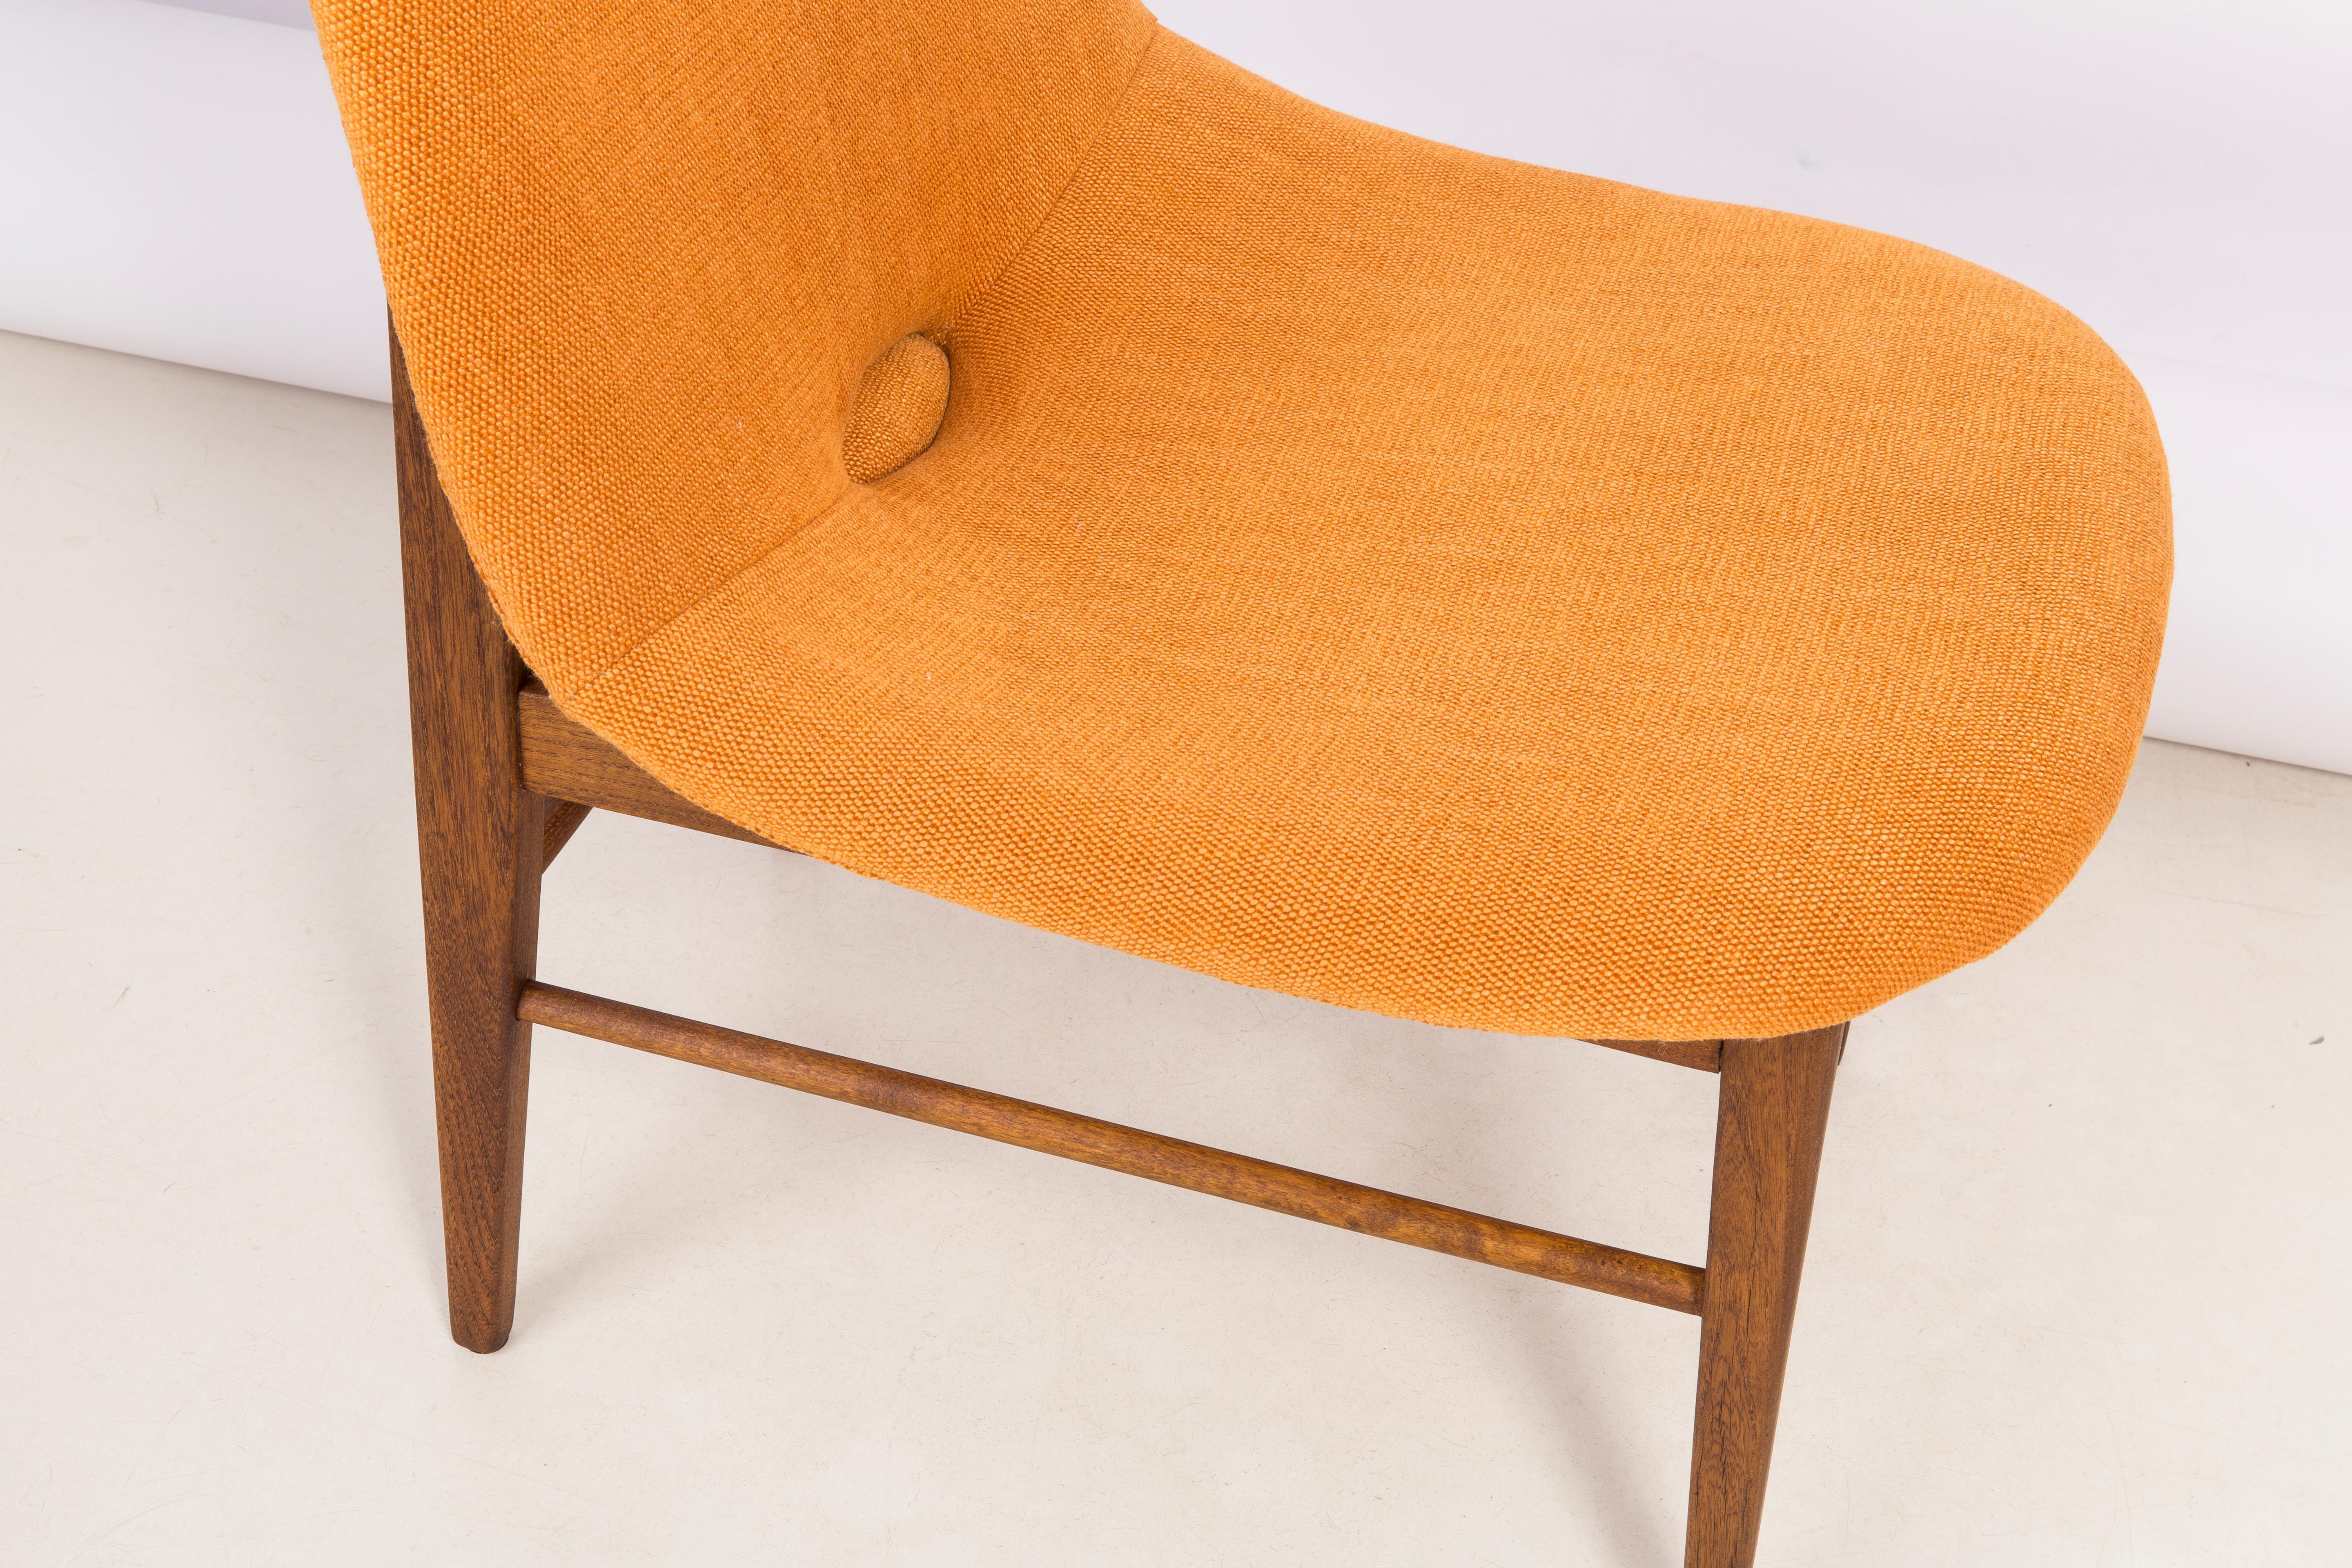 Polish Rare 20th Century Orange Shell Chair, H.Lachert, 1960s For Sale